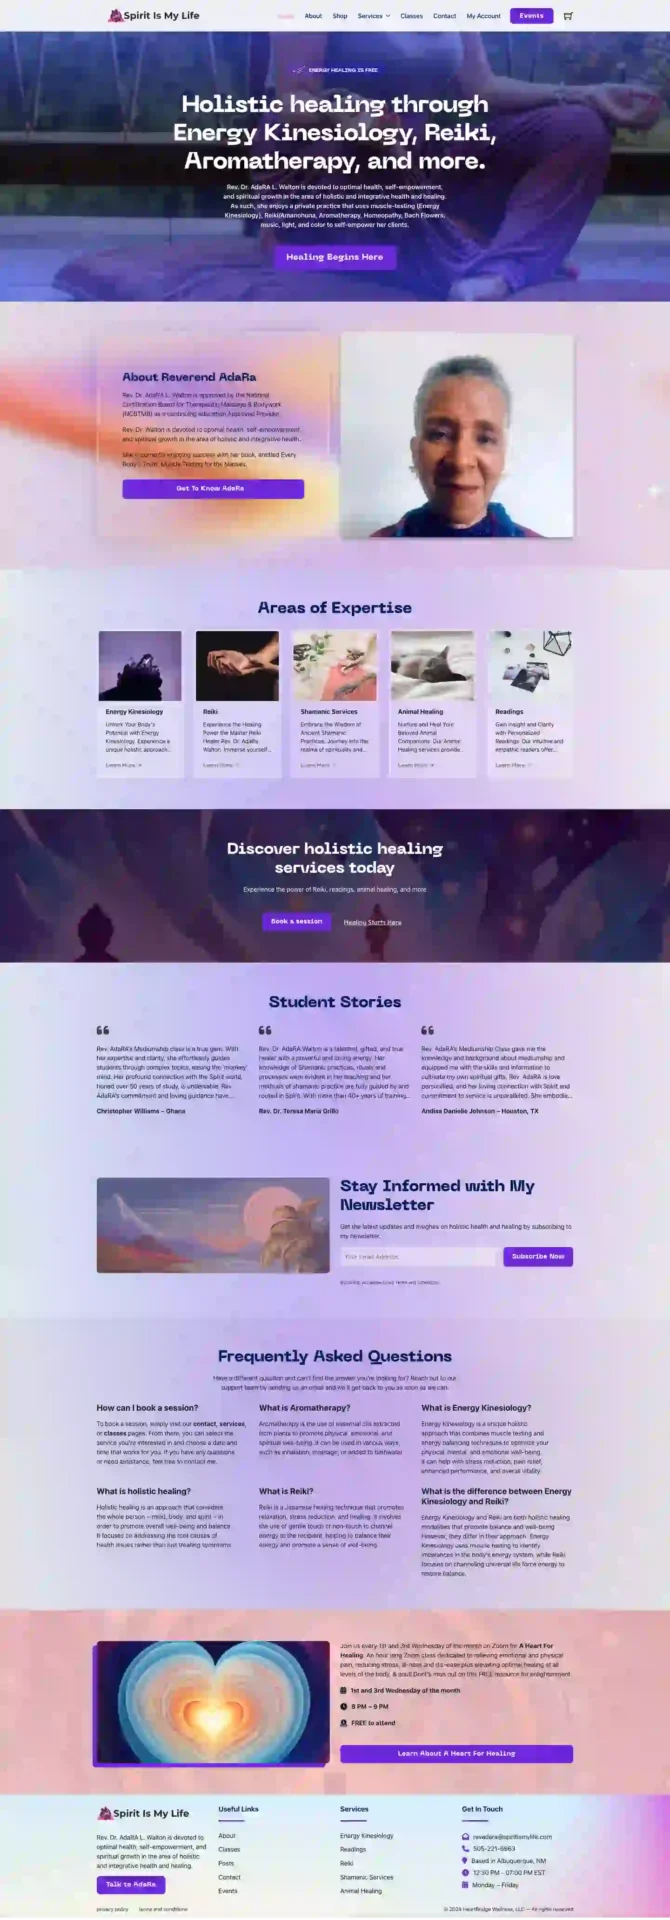 screenshot of the website design of spiritismylife.com